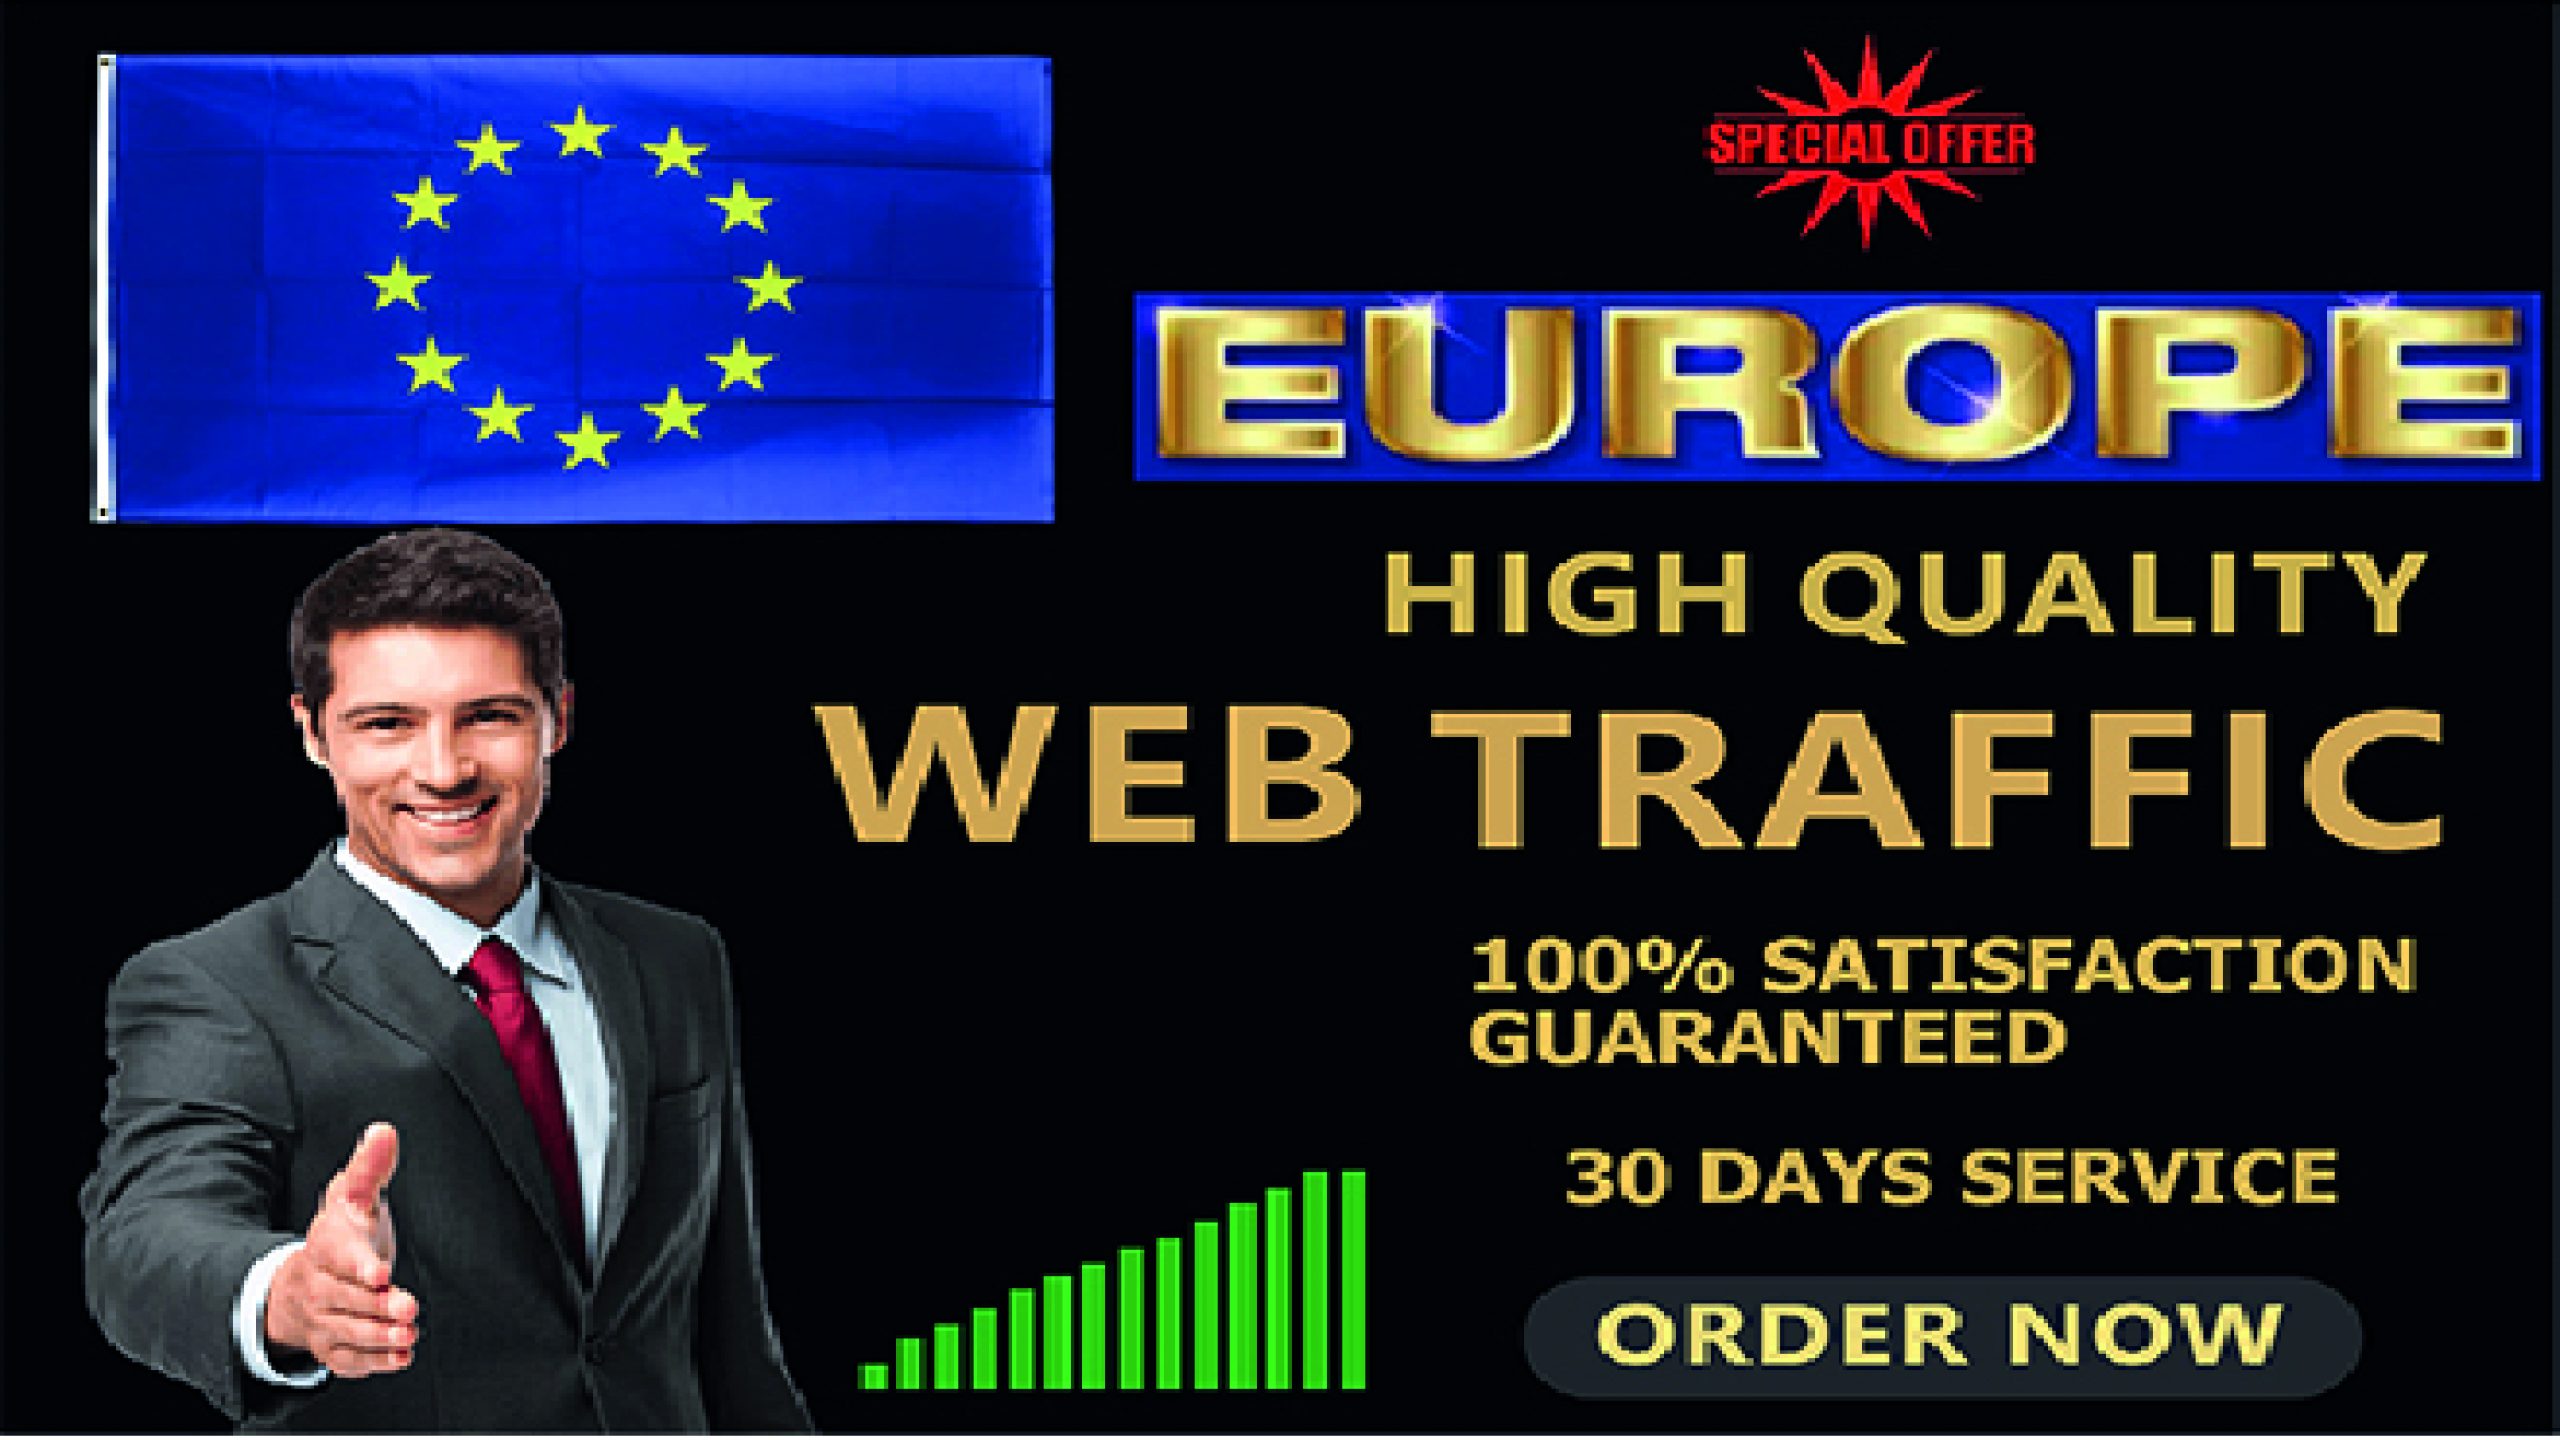 24312I will drive 30000 organic UK web traffic SEO friendly from UK